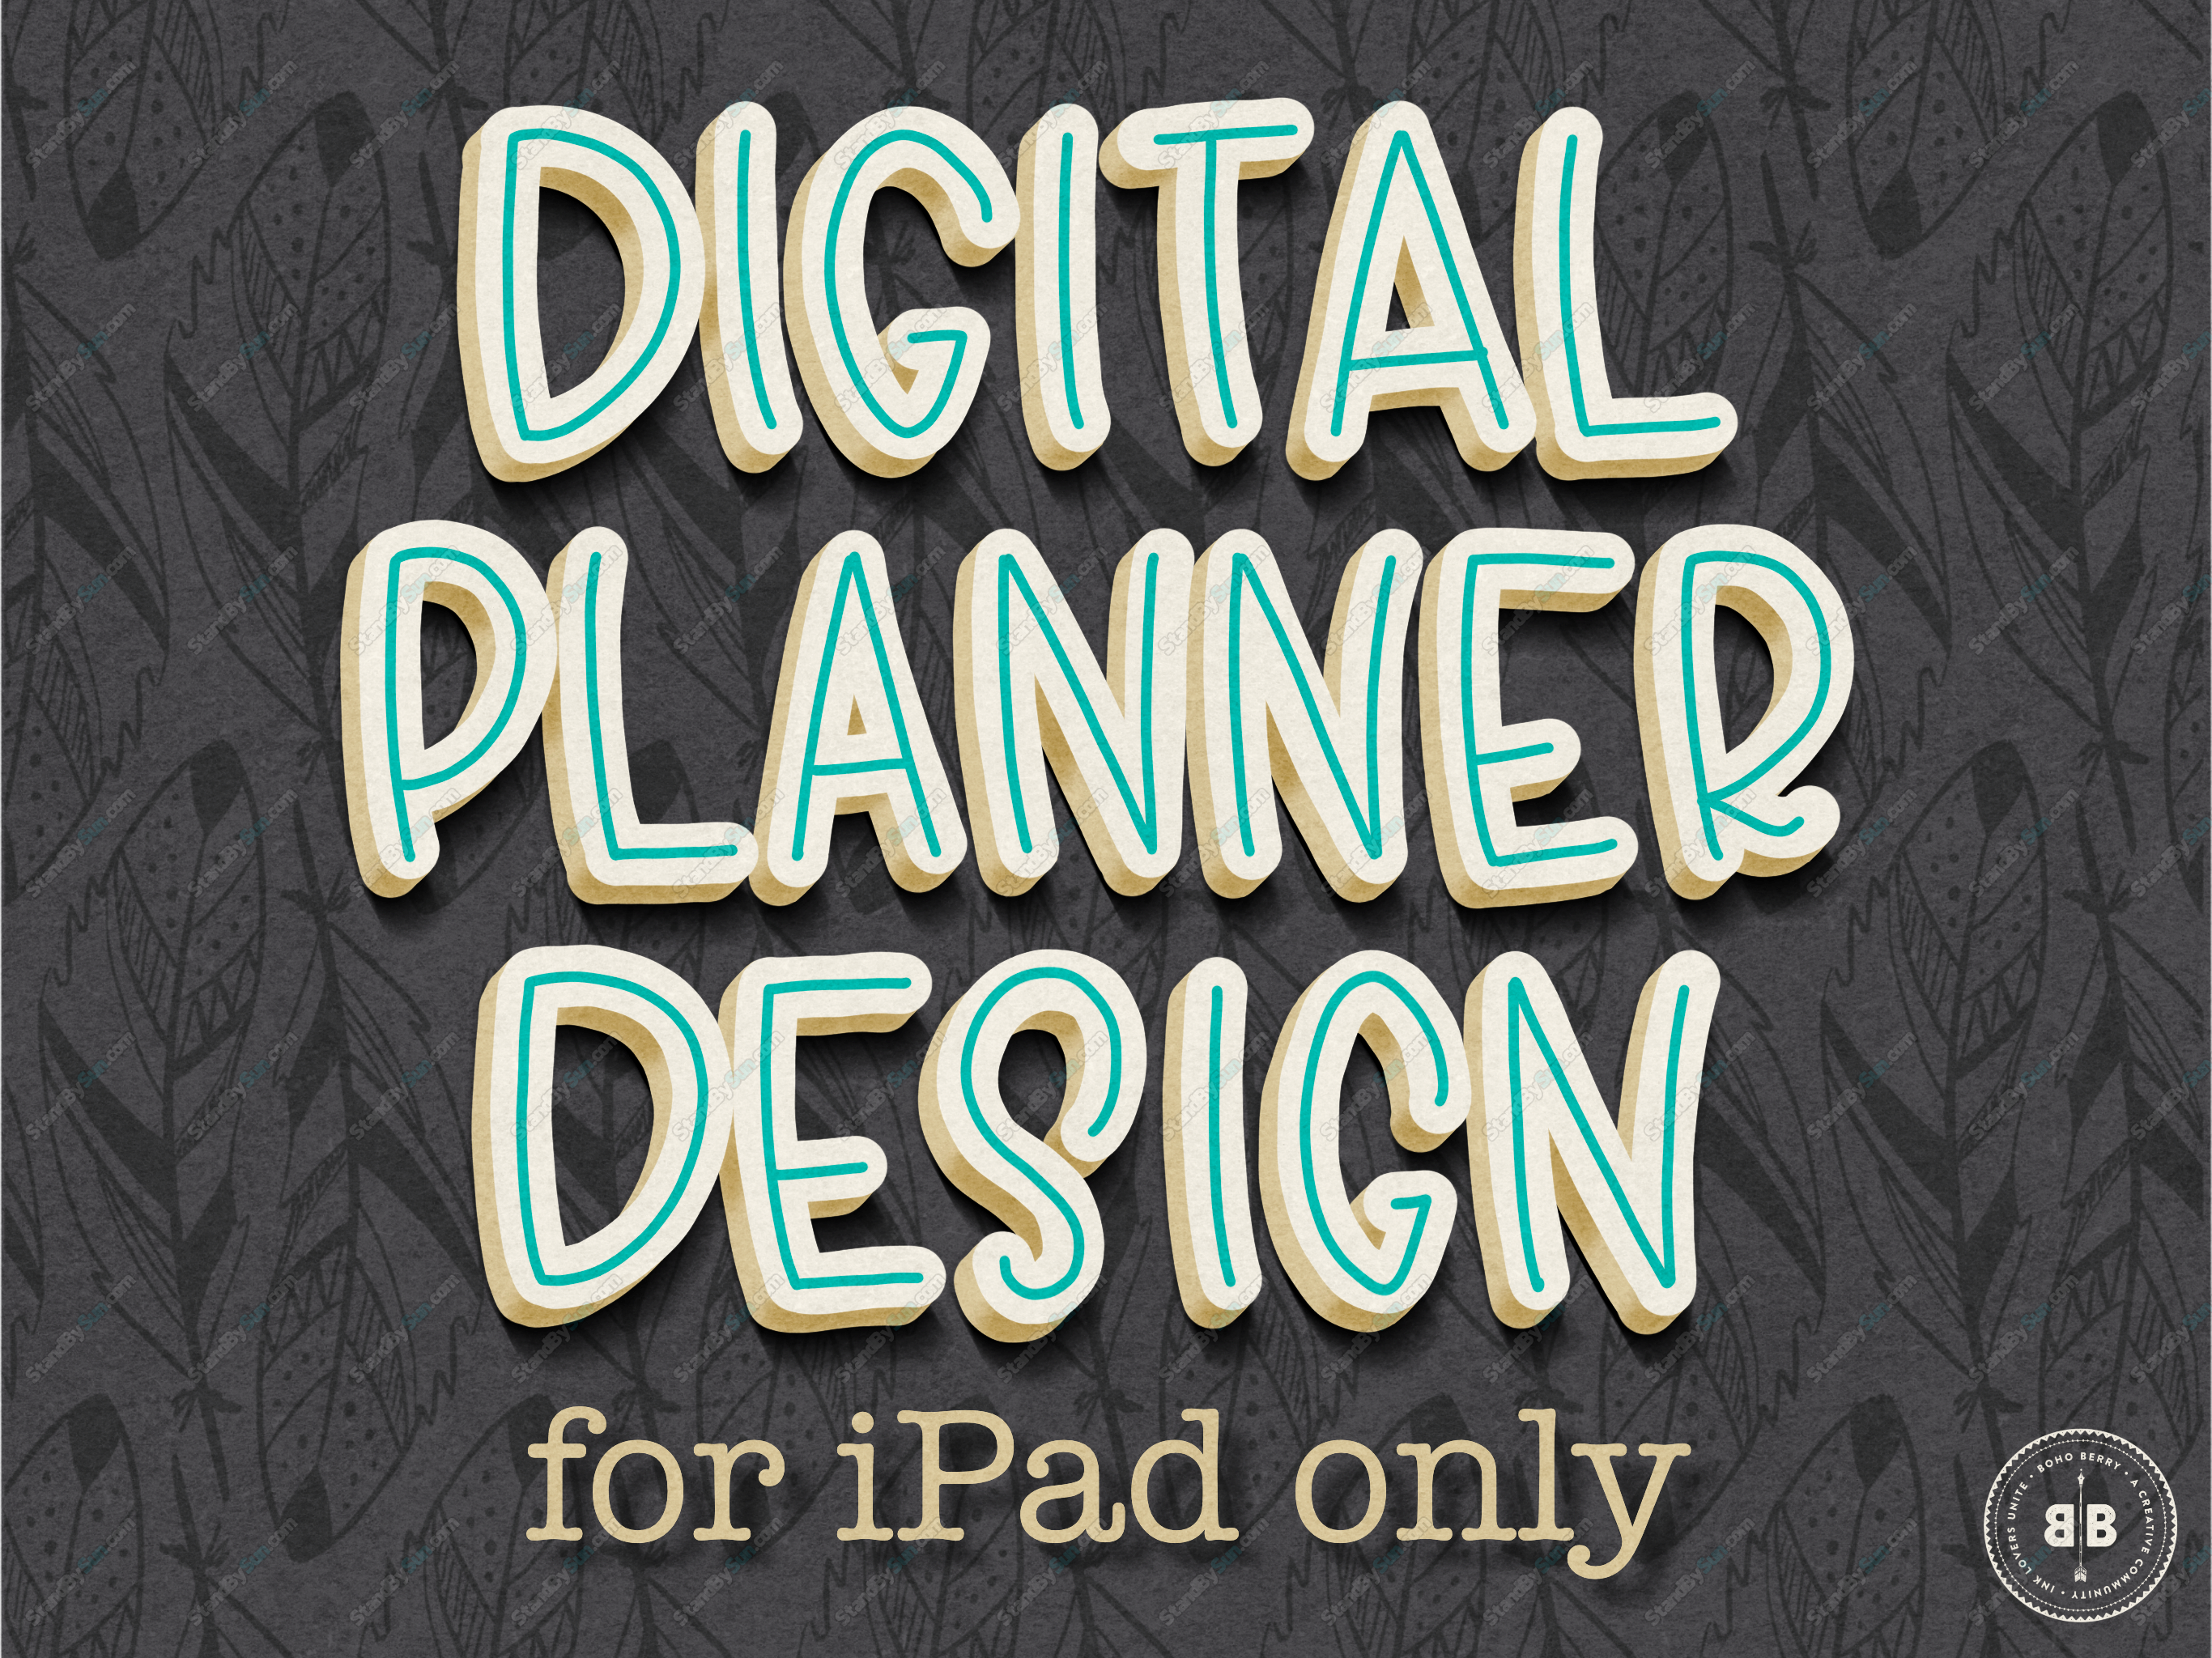 Kara Benz - Digital Planner Design - iPad Only